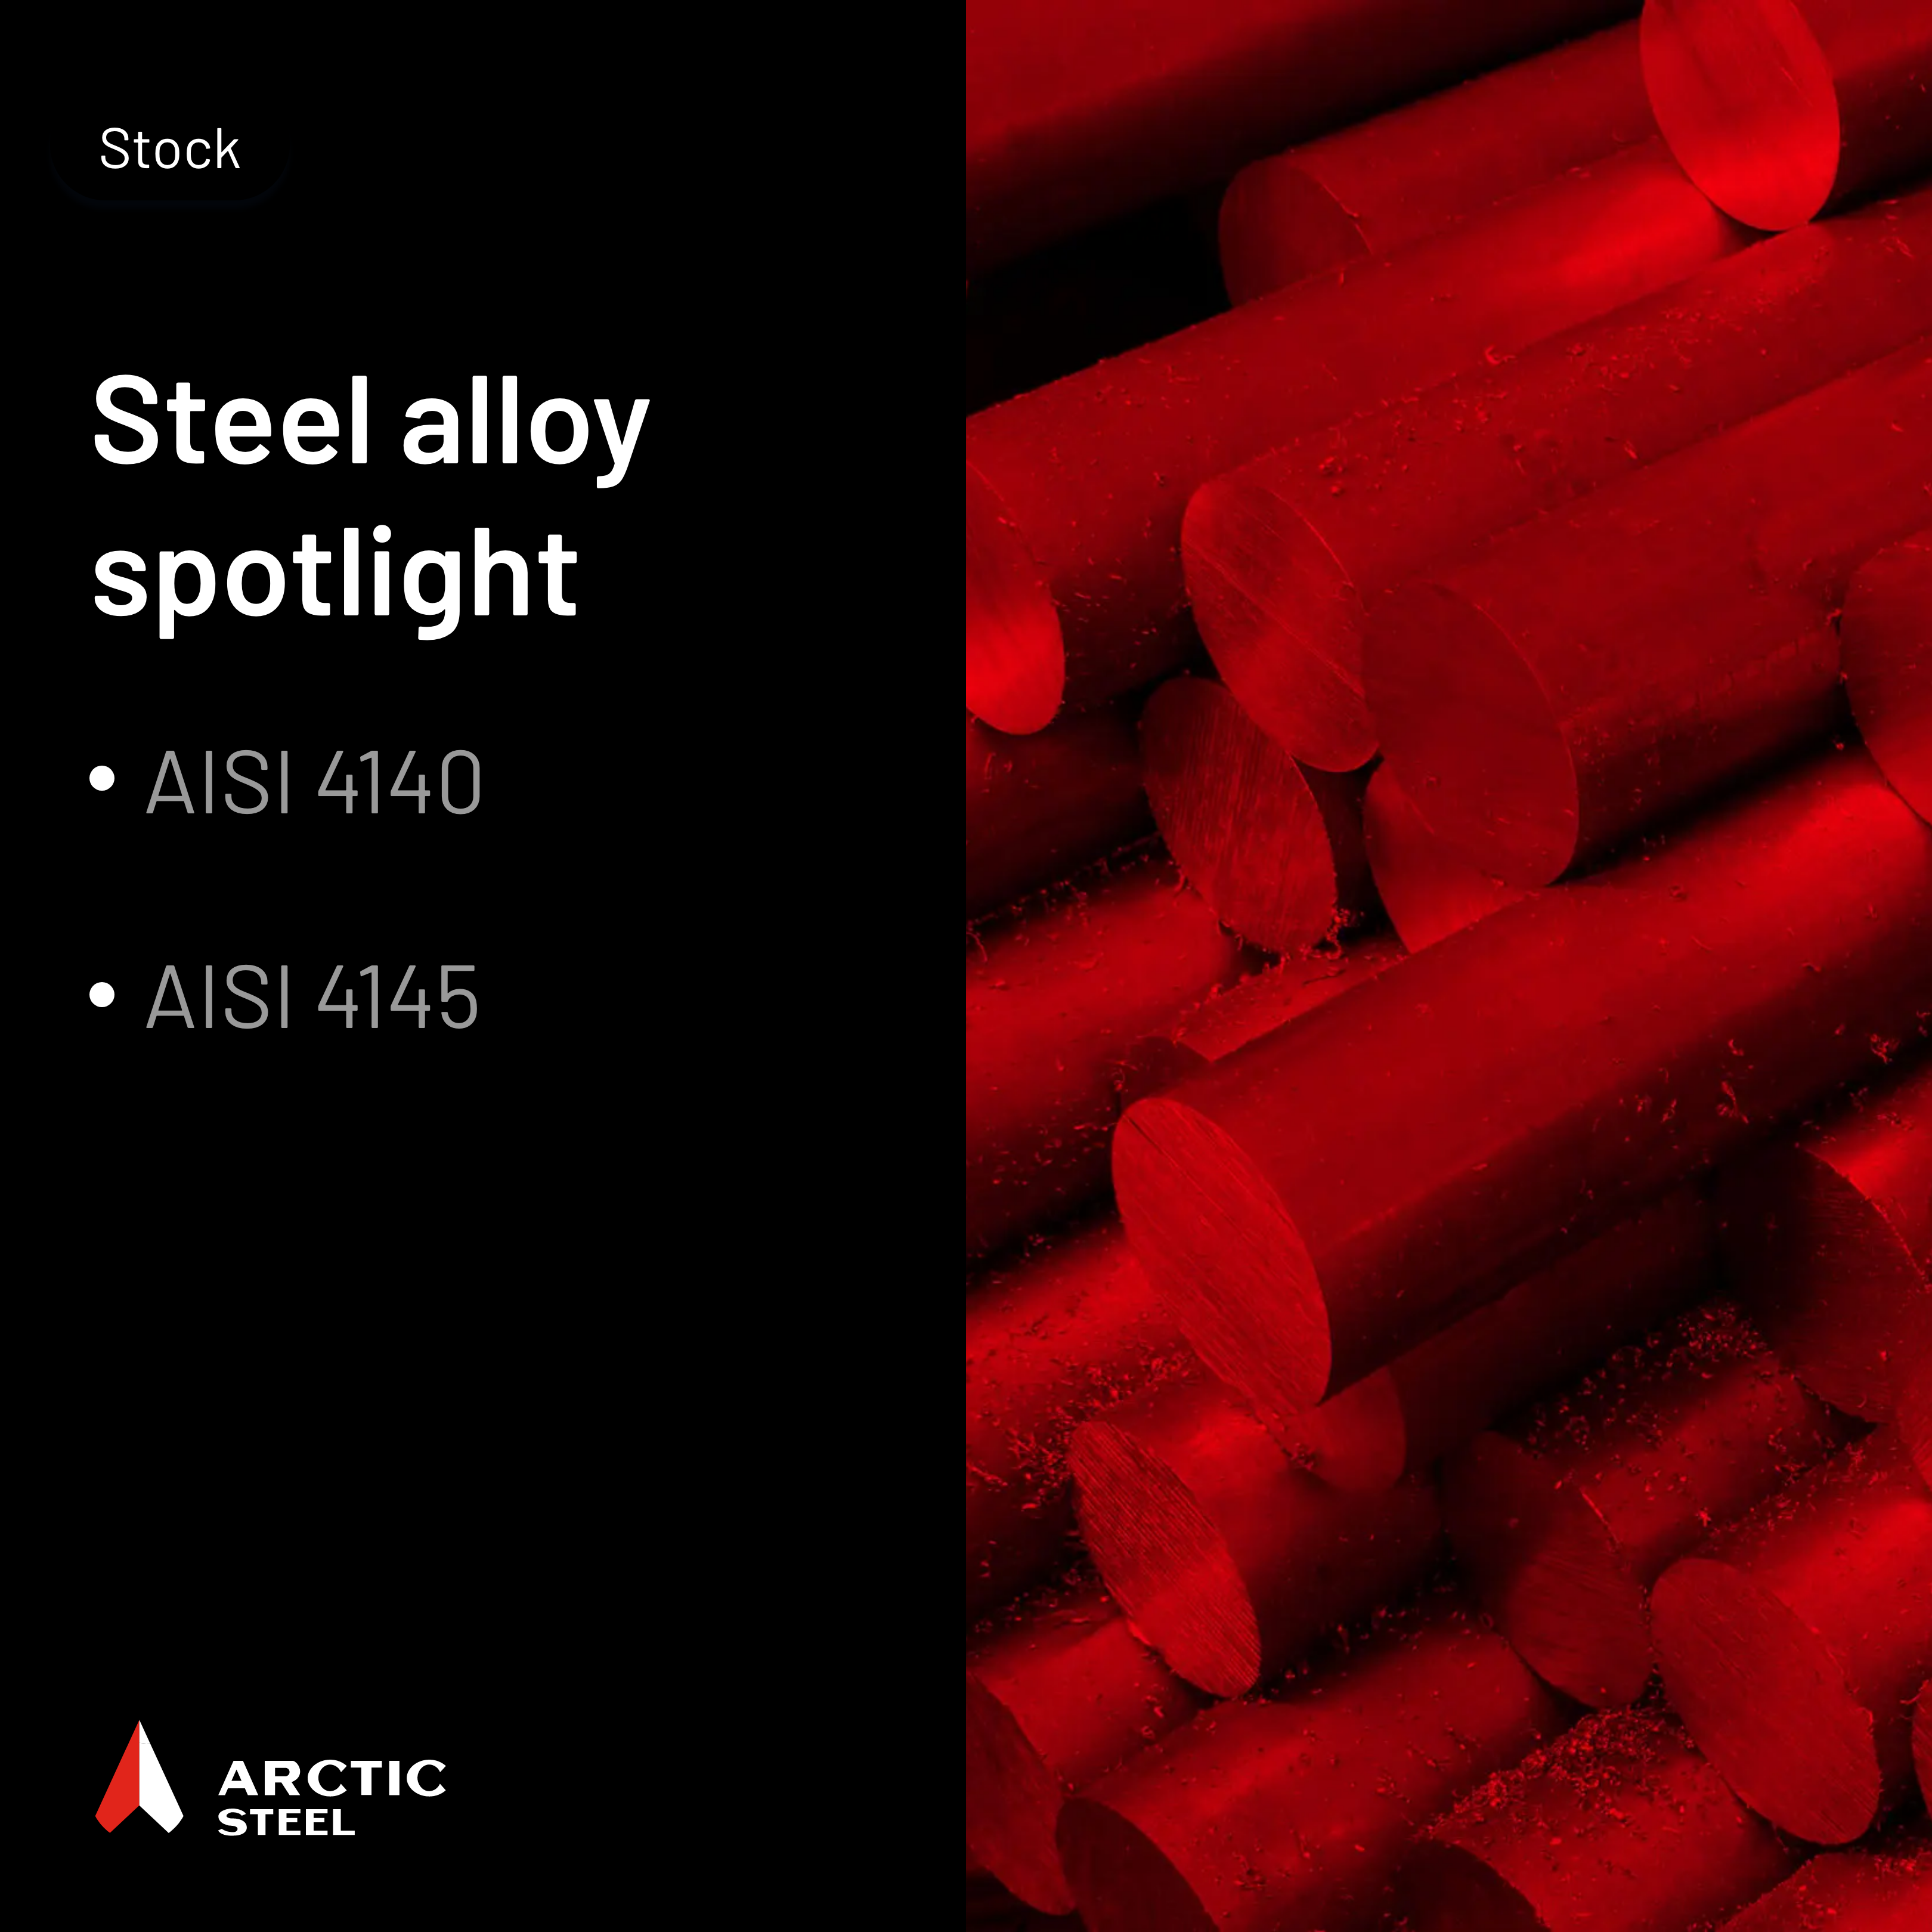 Steel alloy spotlight